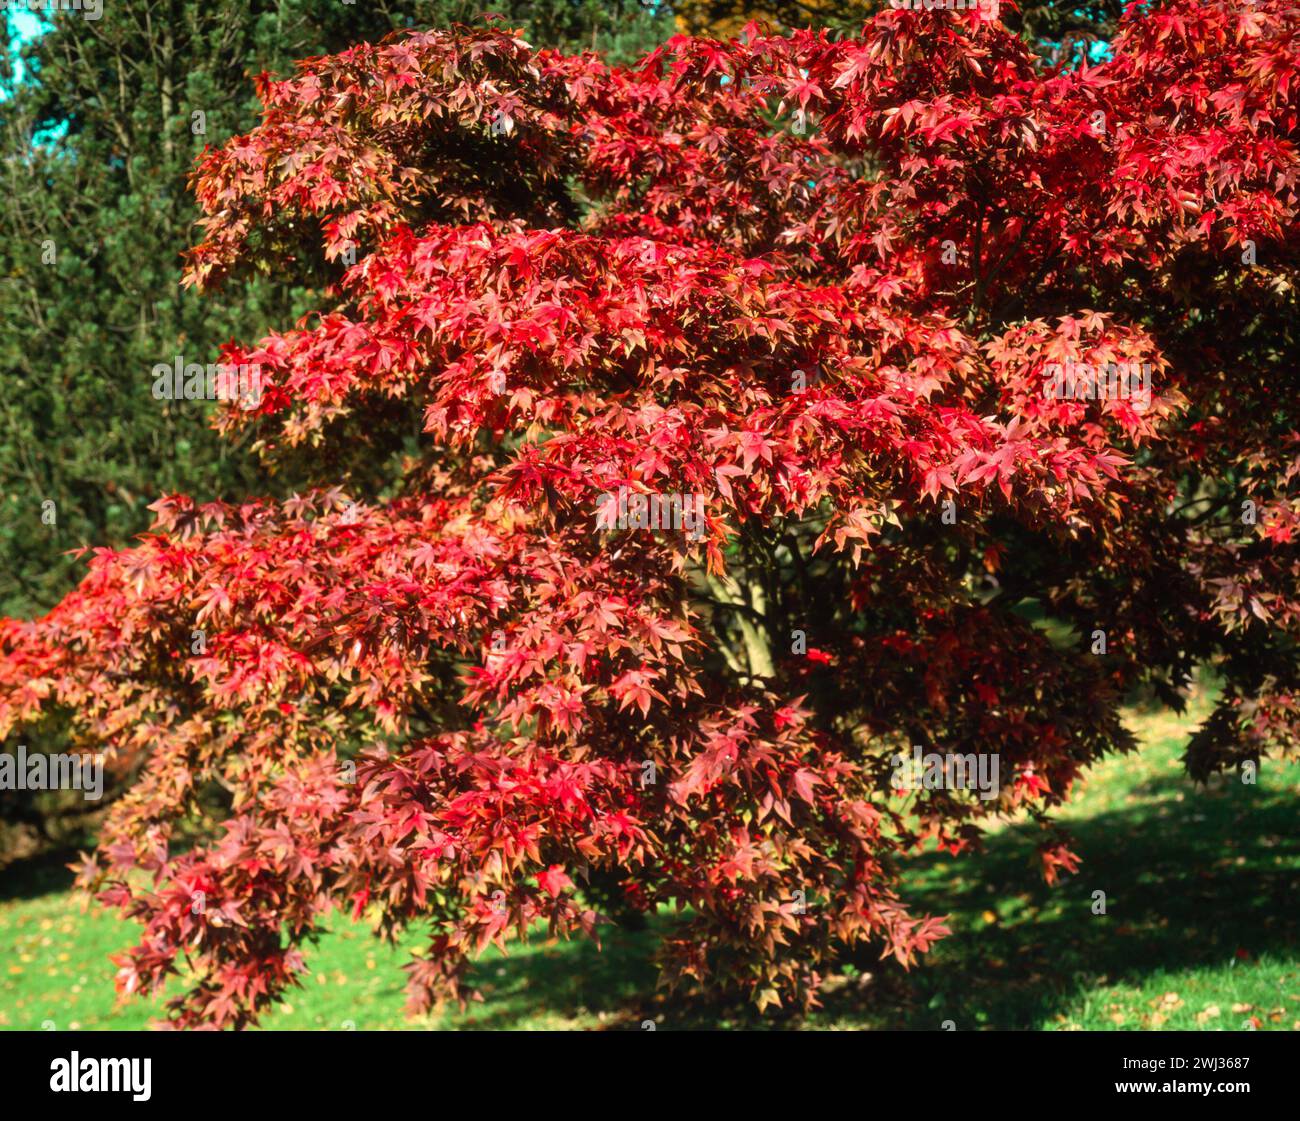 Hojas rojas ricas / follaje de Acer palmatum 'Osakazuki' (también conocido como Acer palmatum 'Taihai') Árbol de arce japonés en otoño, Batsford Arboretum, Inglaterra, Reino Unido Foto de stock